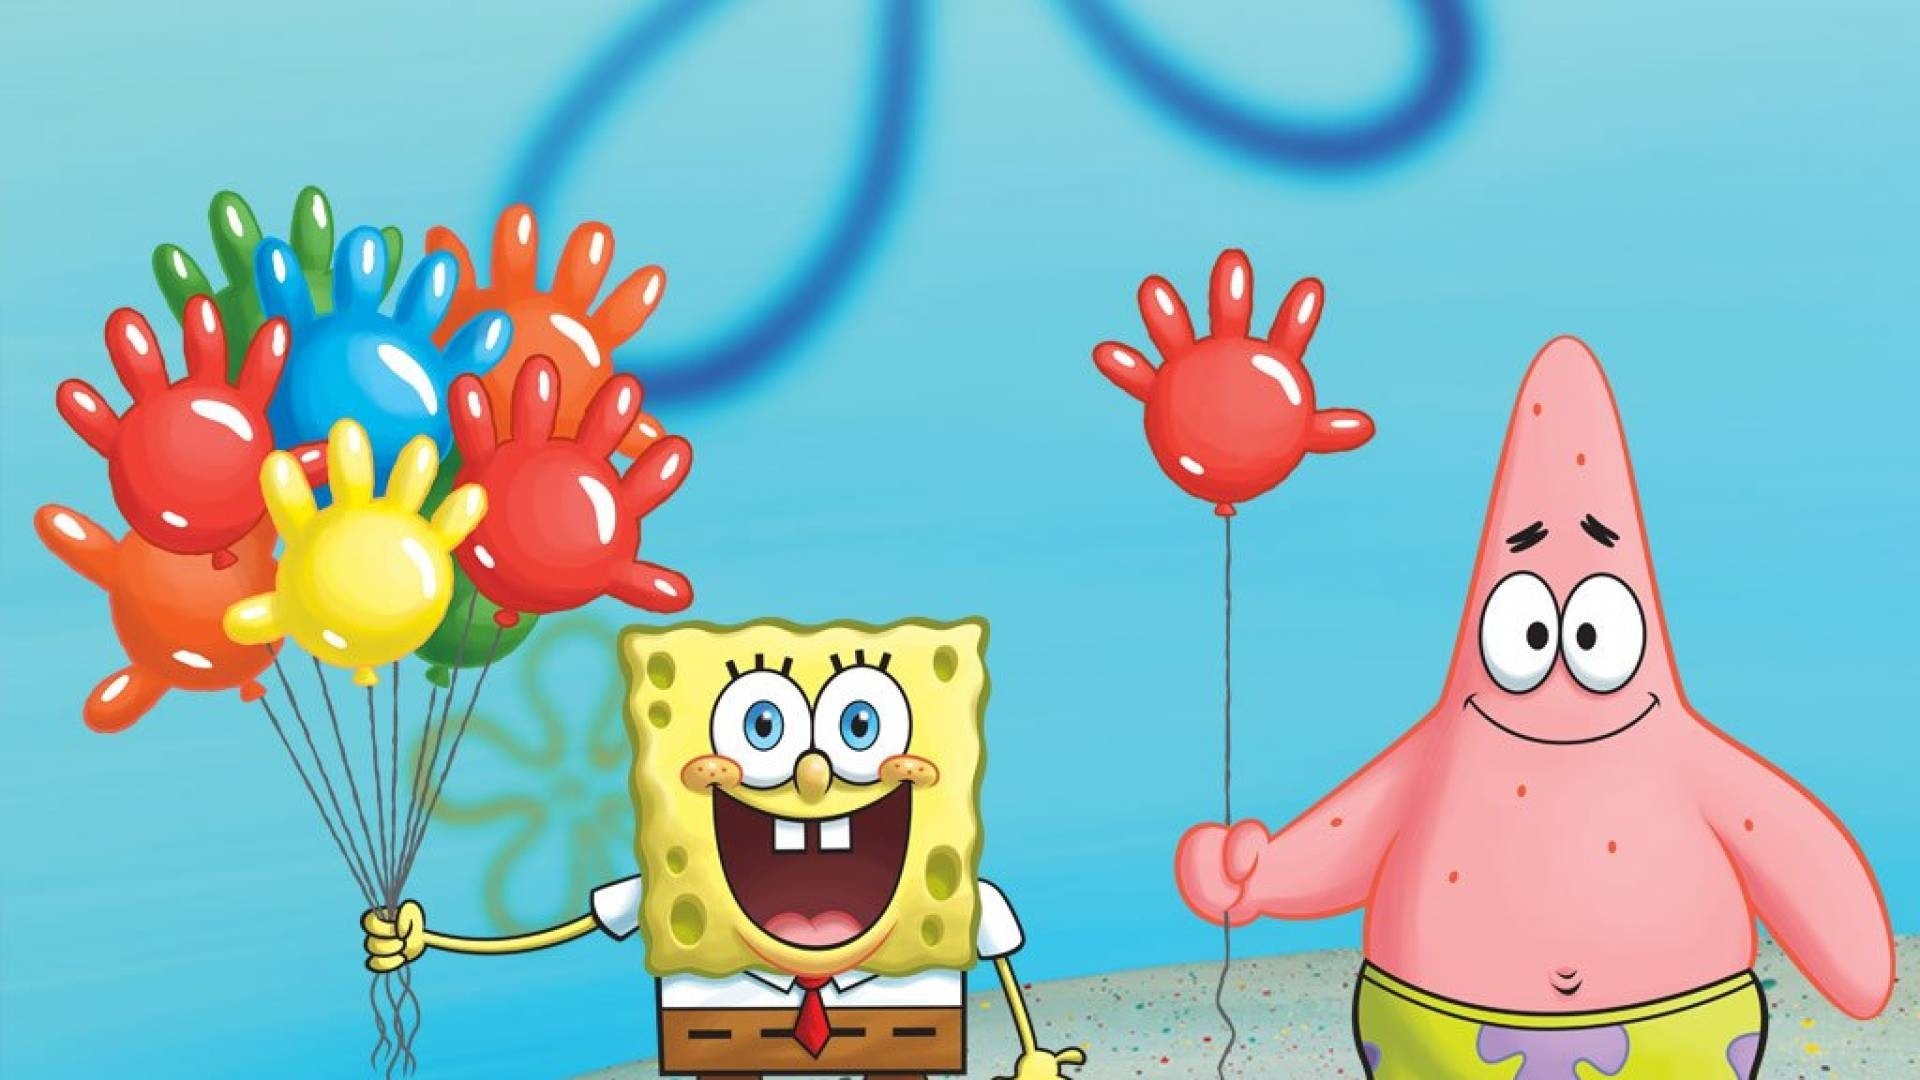 Spongebob And Patrick Wallpaper For Pc